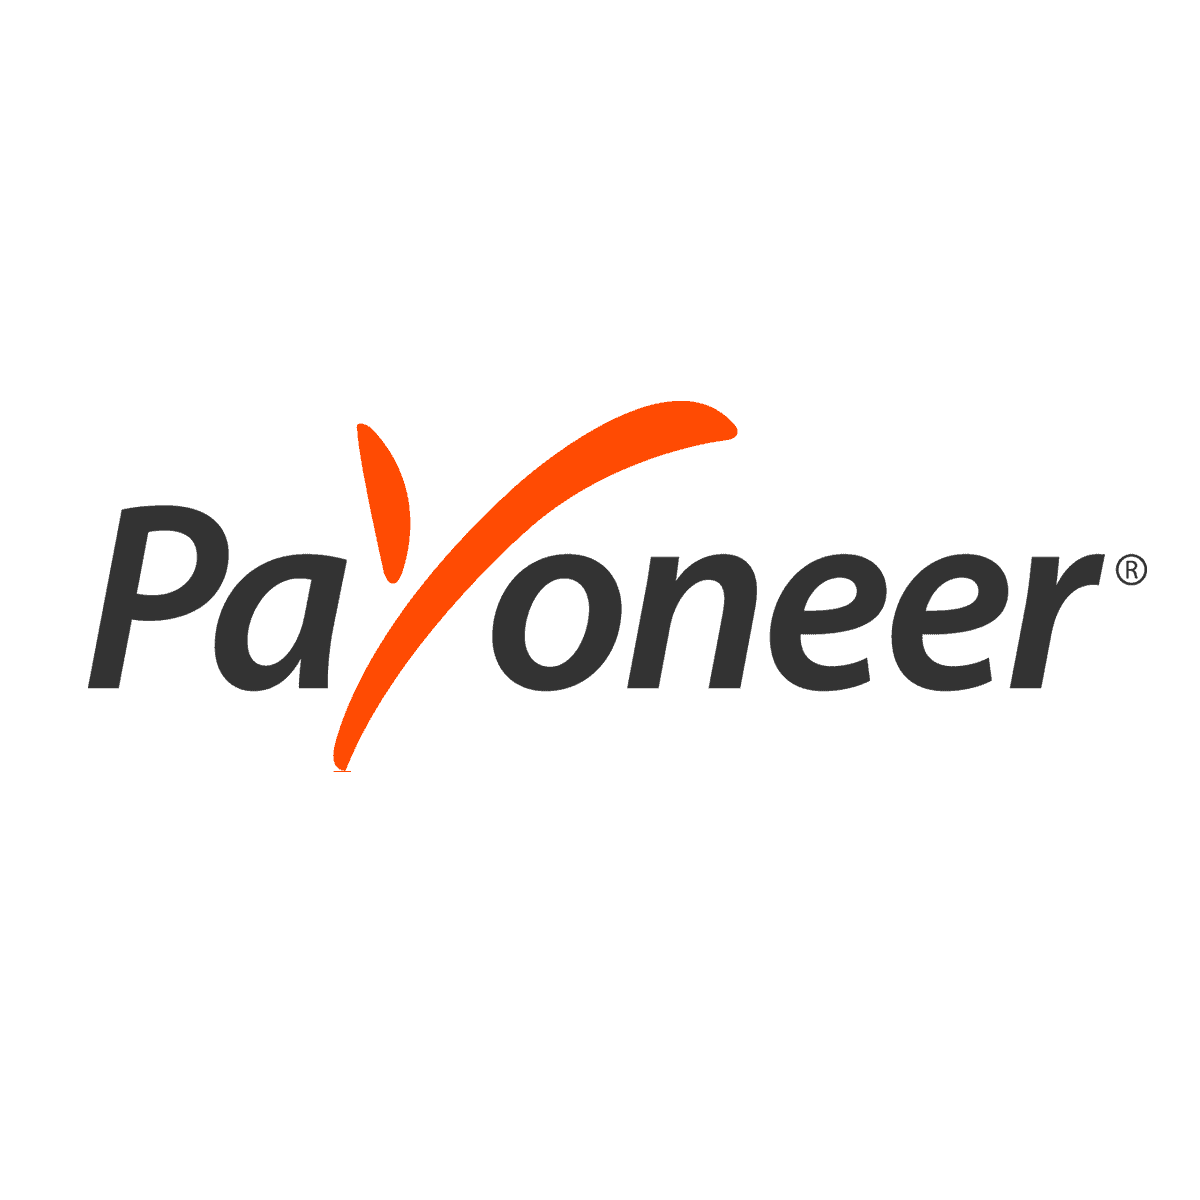 Payoneer Referral Code 2022: Get $25 sign-up Bonus - Unleash